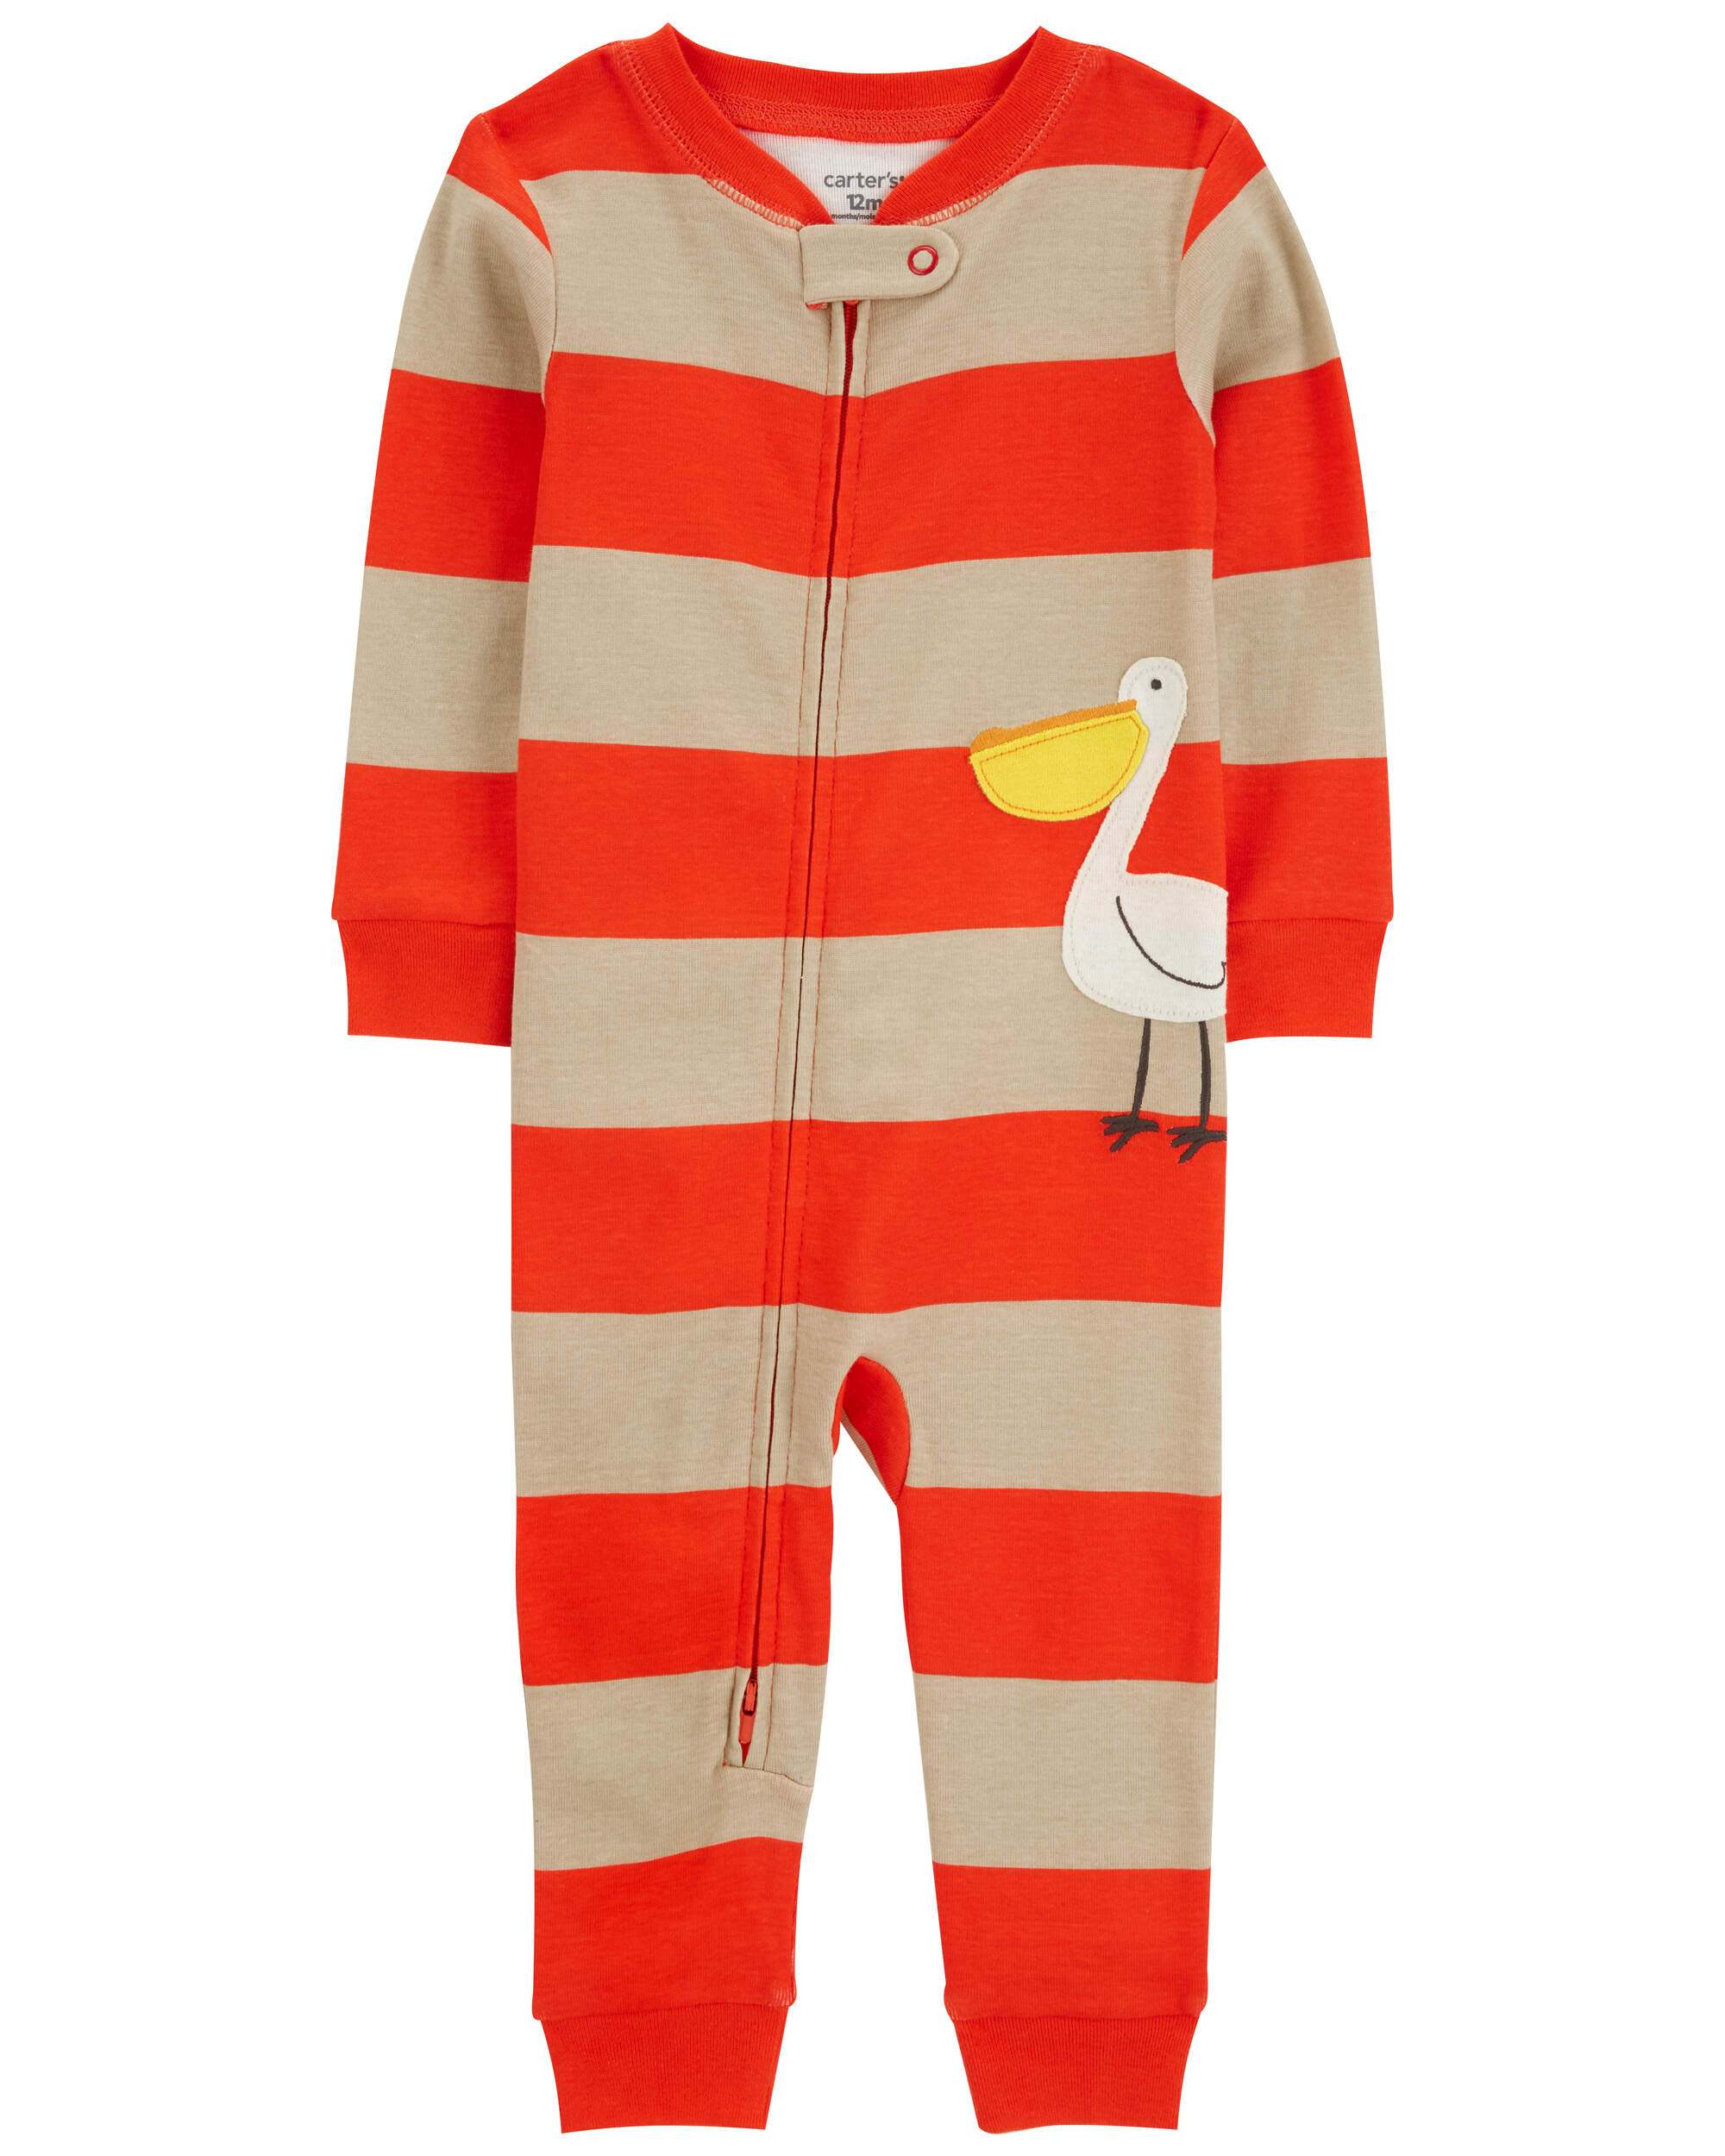 Baby 1-Piece Chameleon 100% Snug Fit Cotton Footless Pyjamas